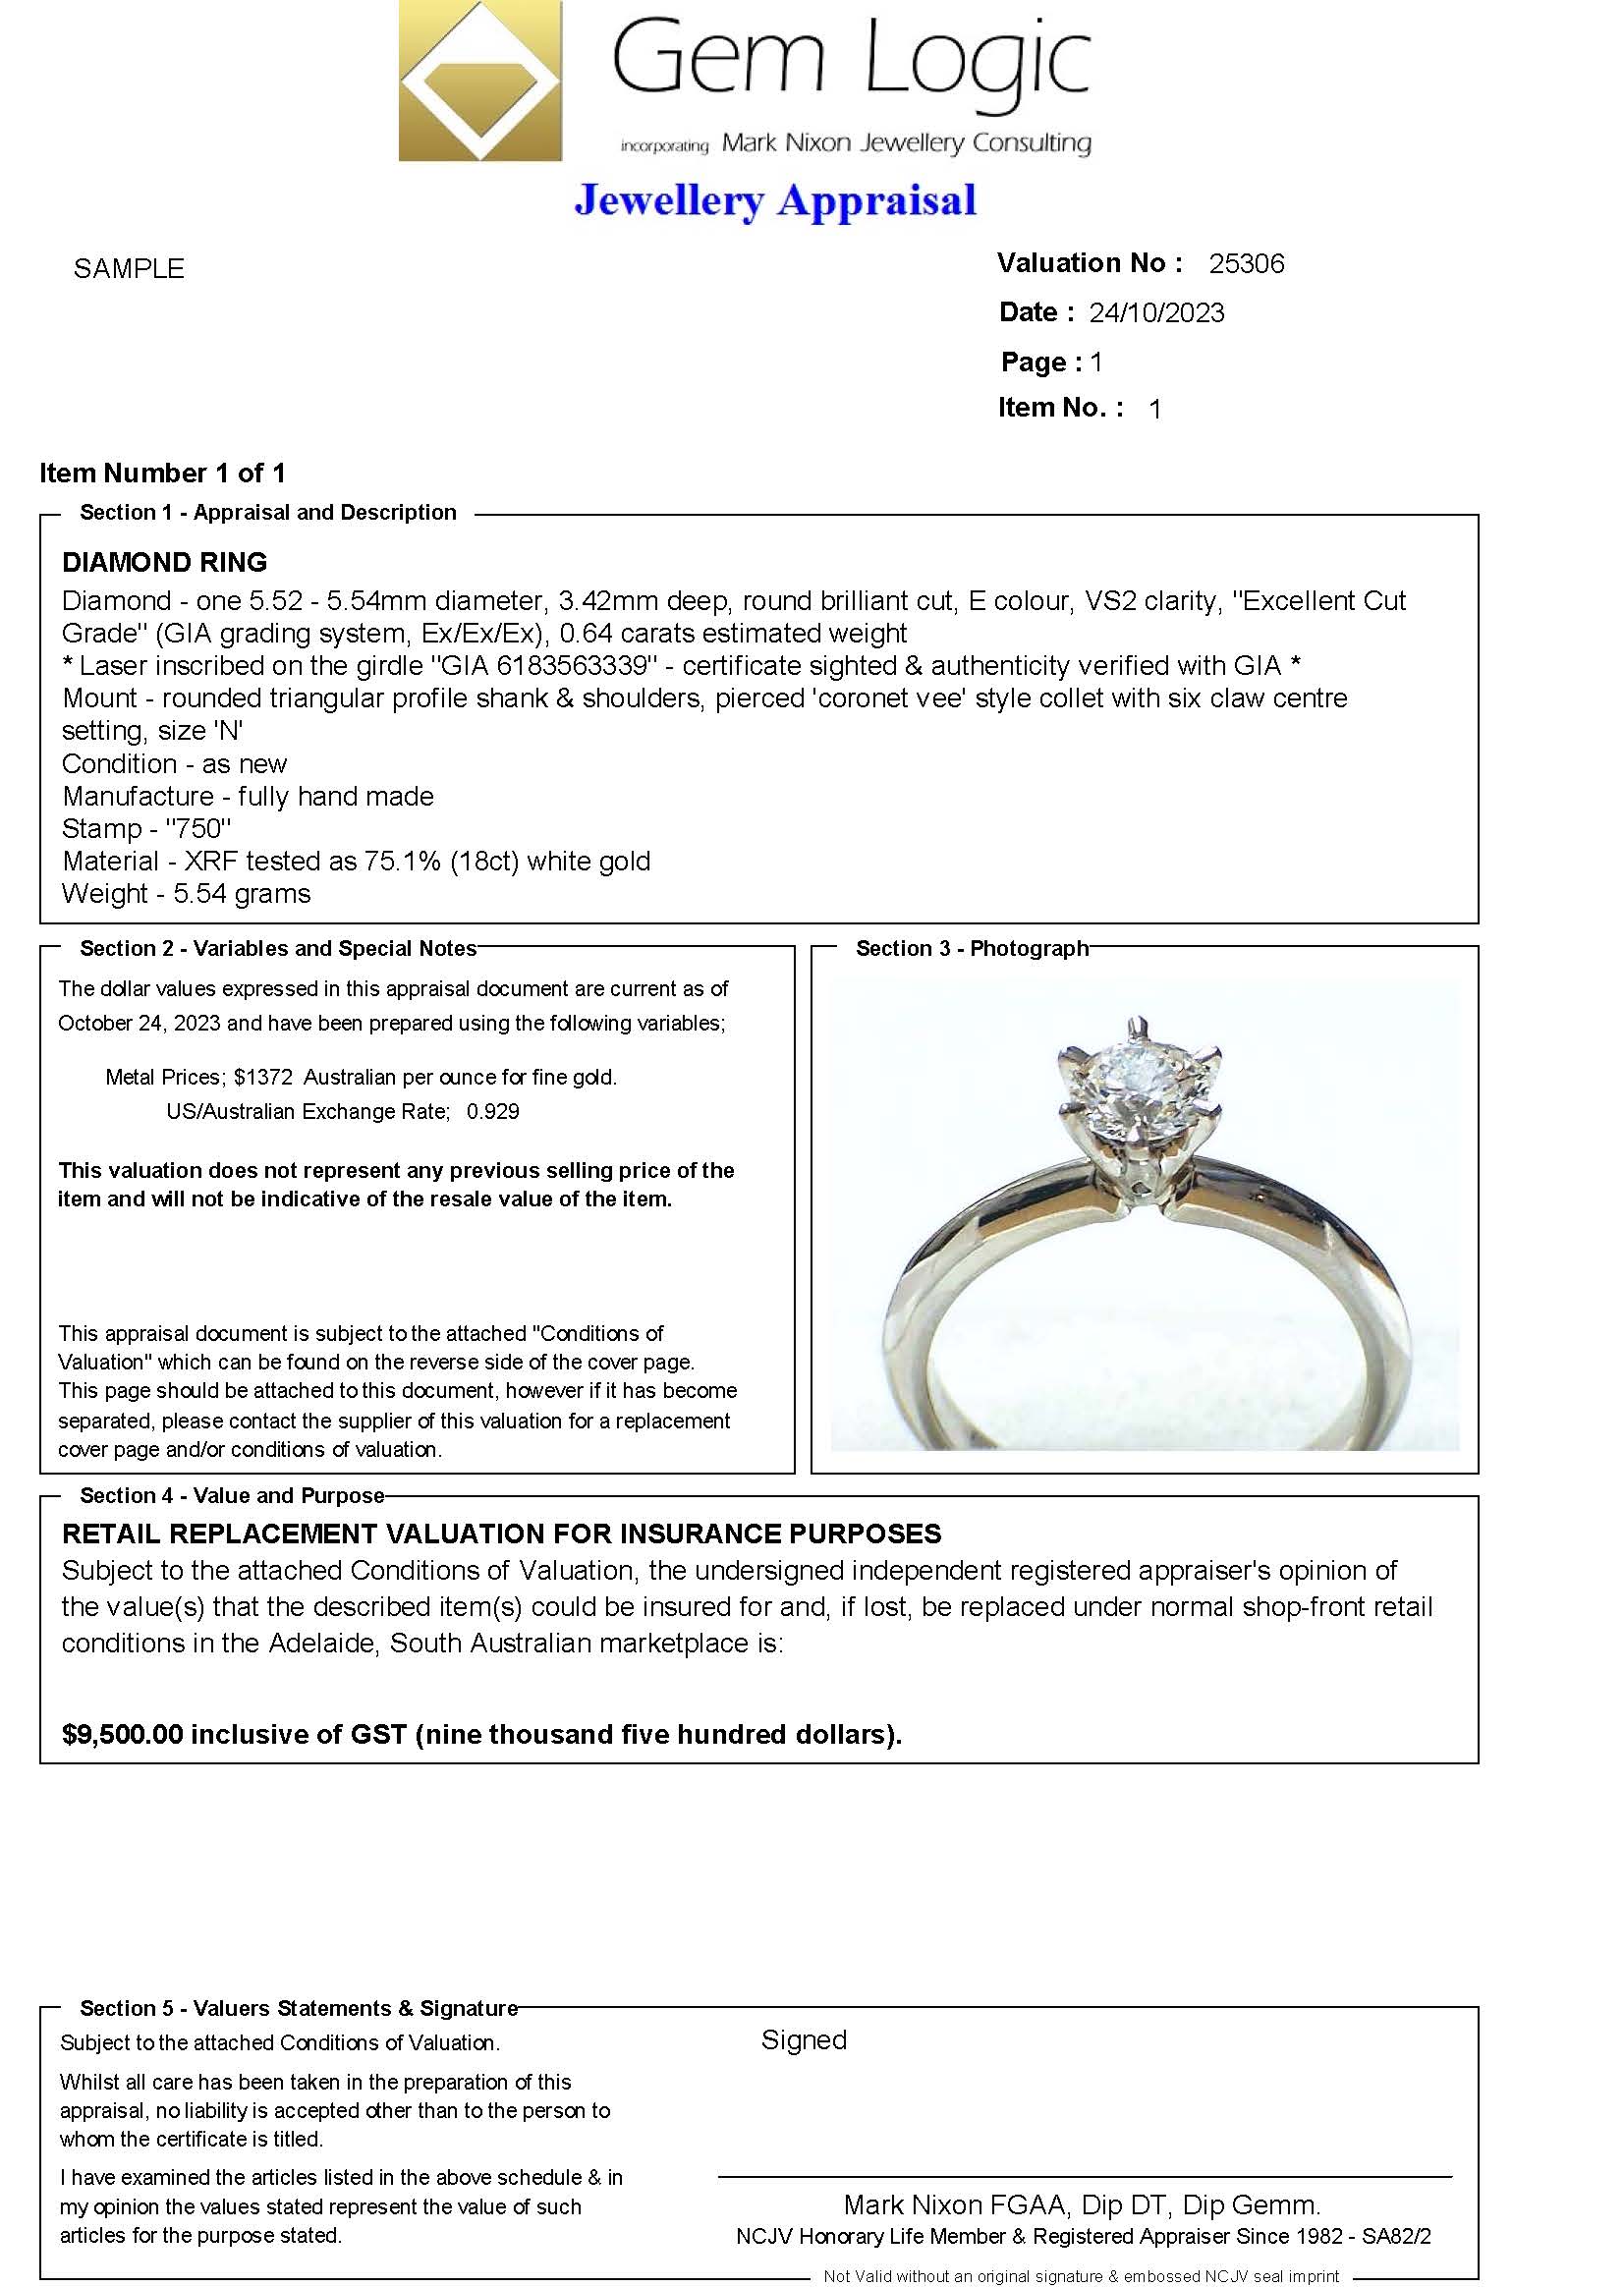 Sample Jewellery Valuation Document - Gem Logic